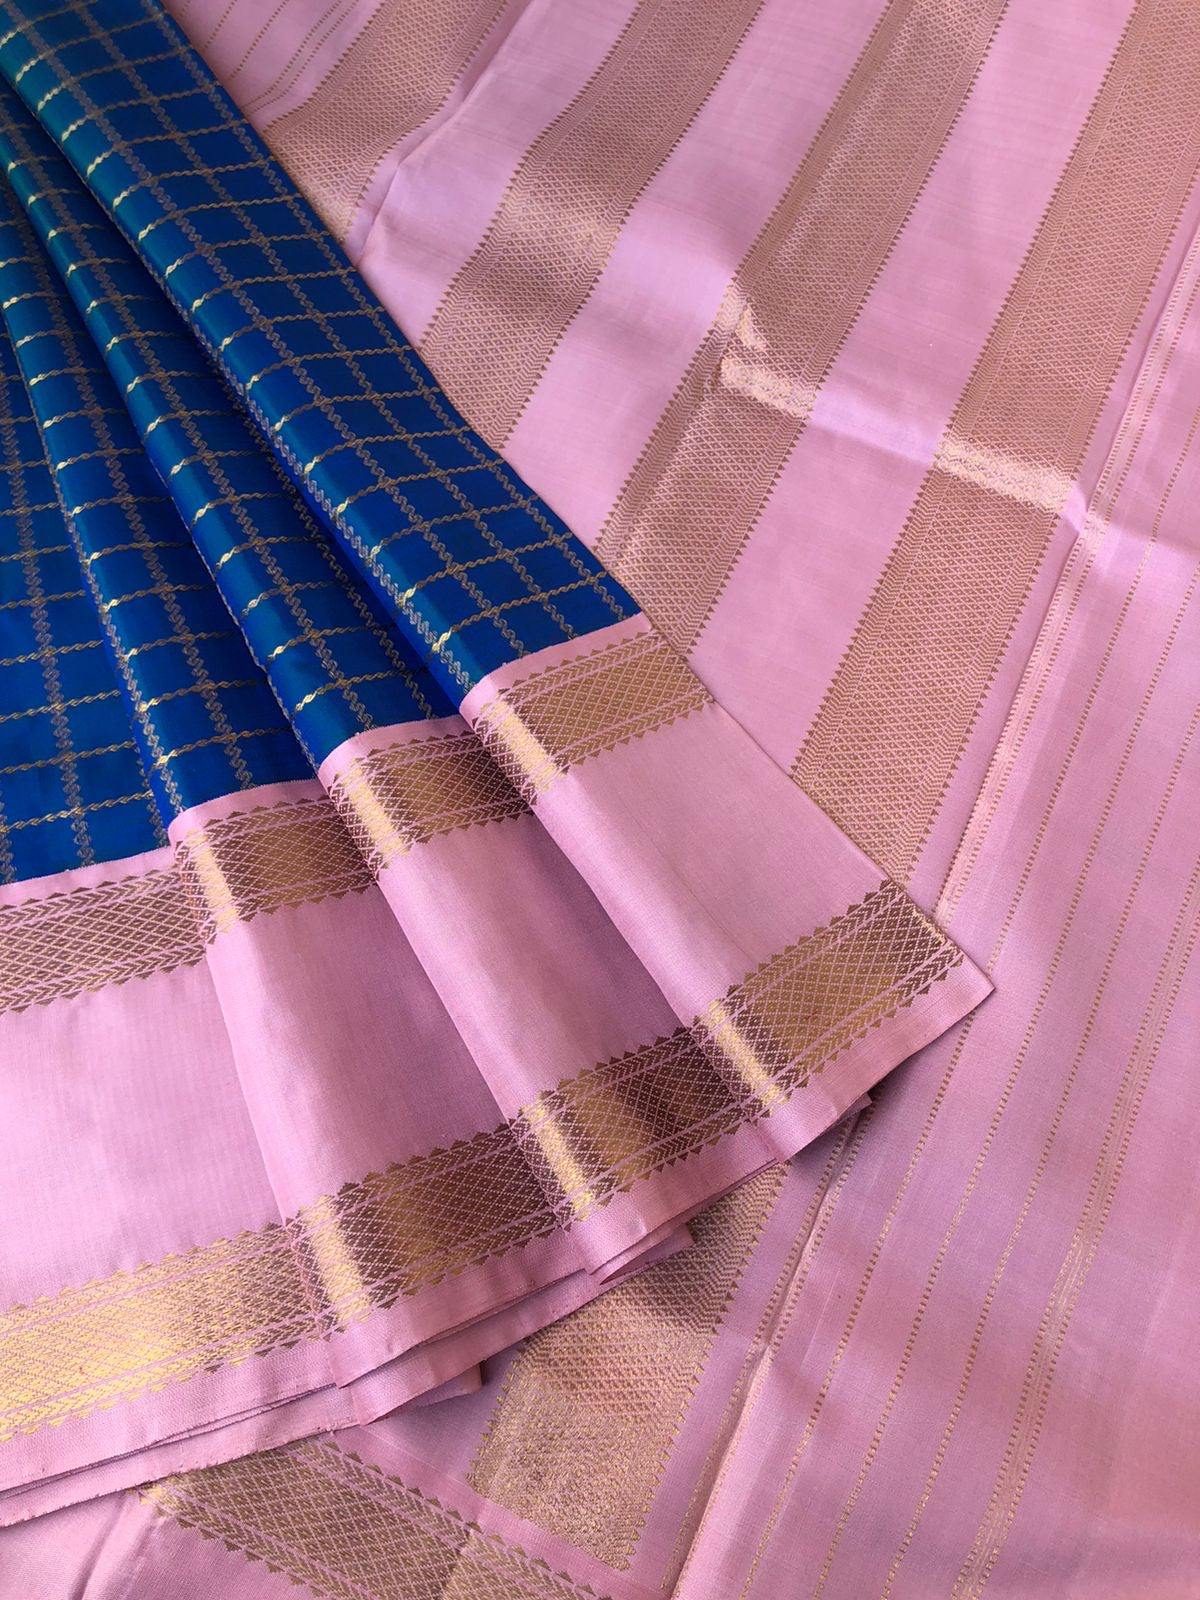 Kattams on Kanchivarams -Veldhari Kattam - the gorgeous grand rama blue and baby pink korvai woven borders veldhari kattam woven body